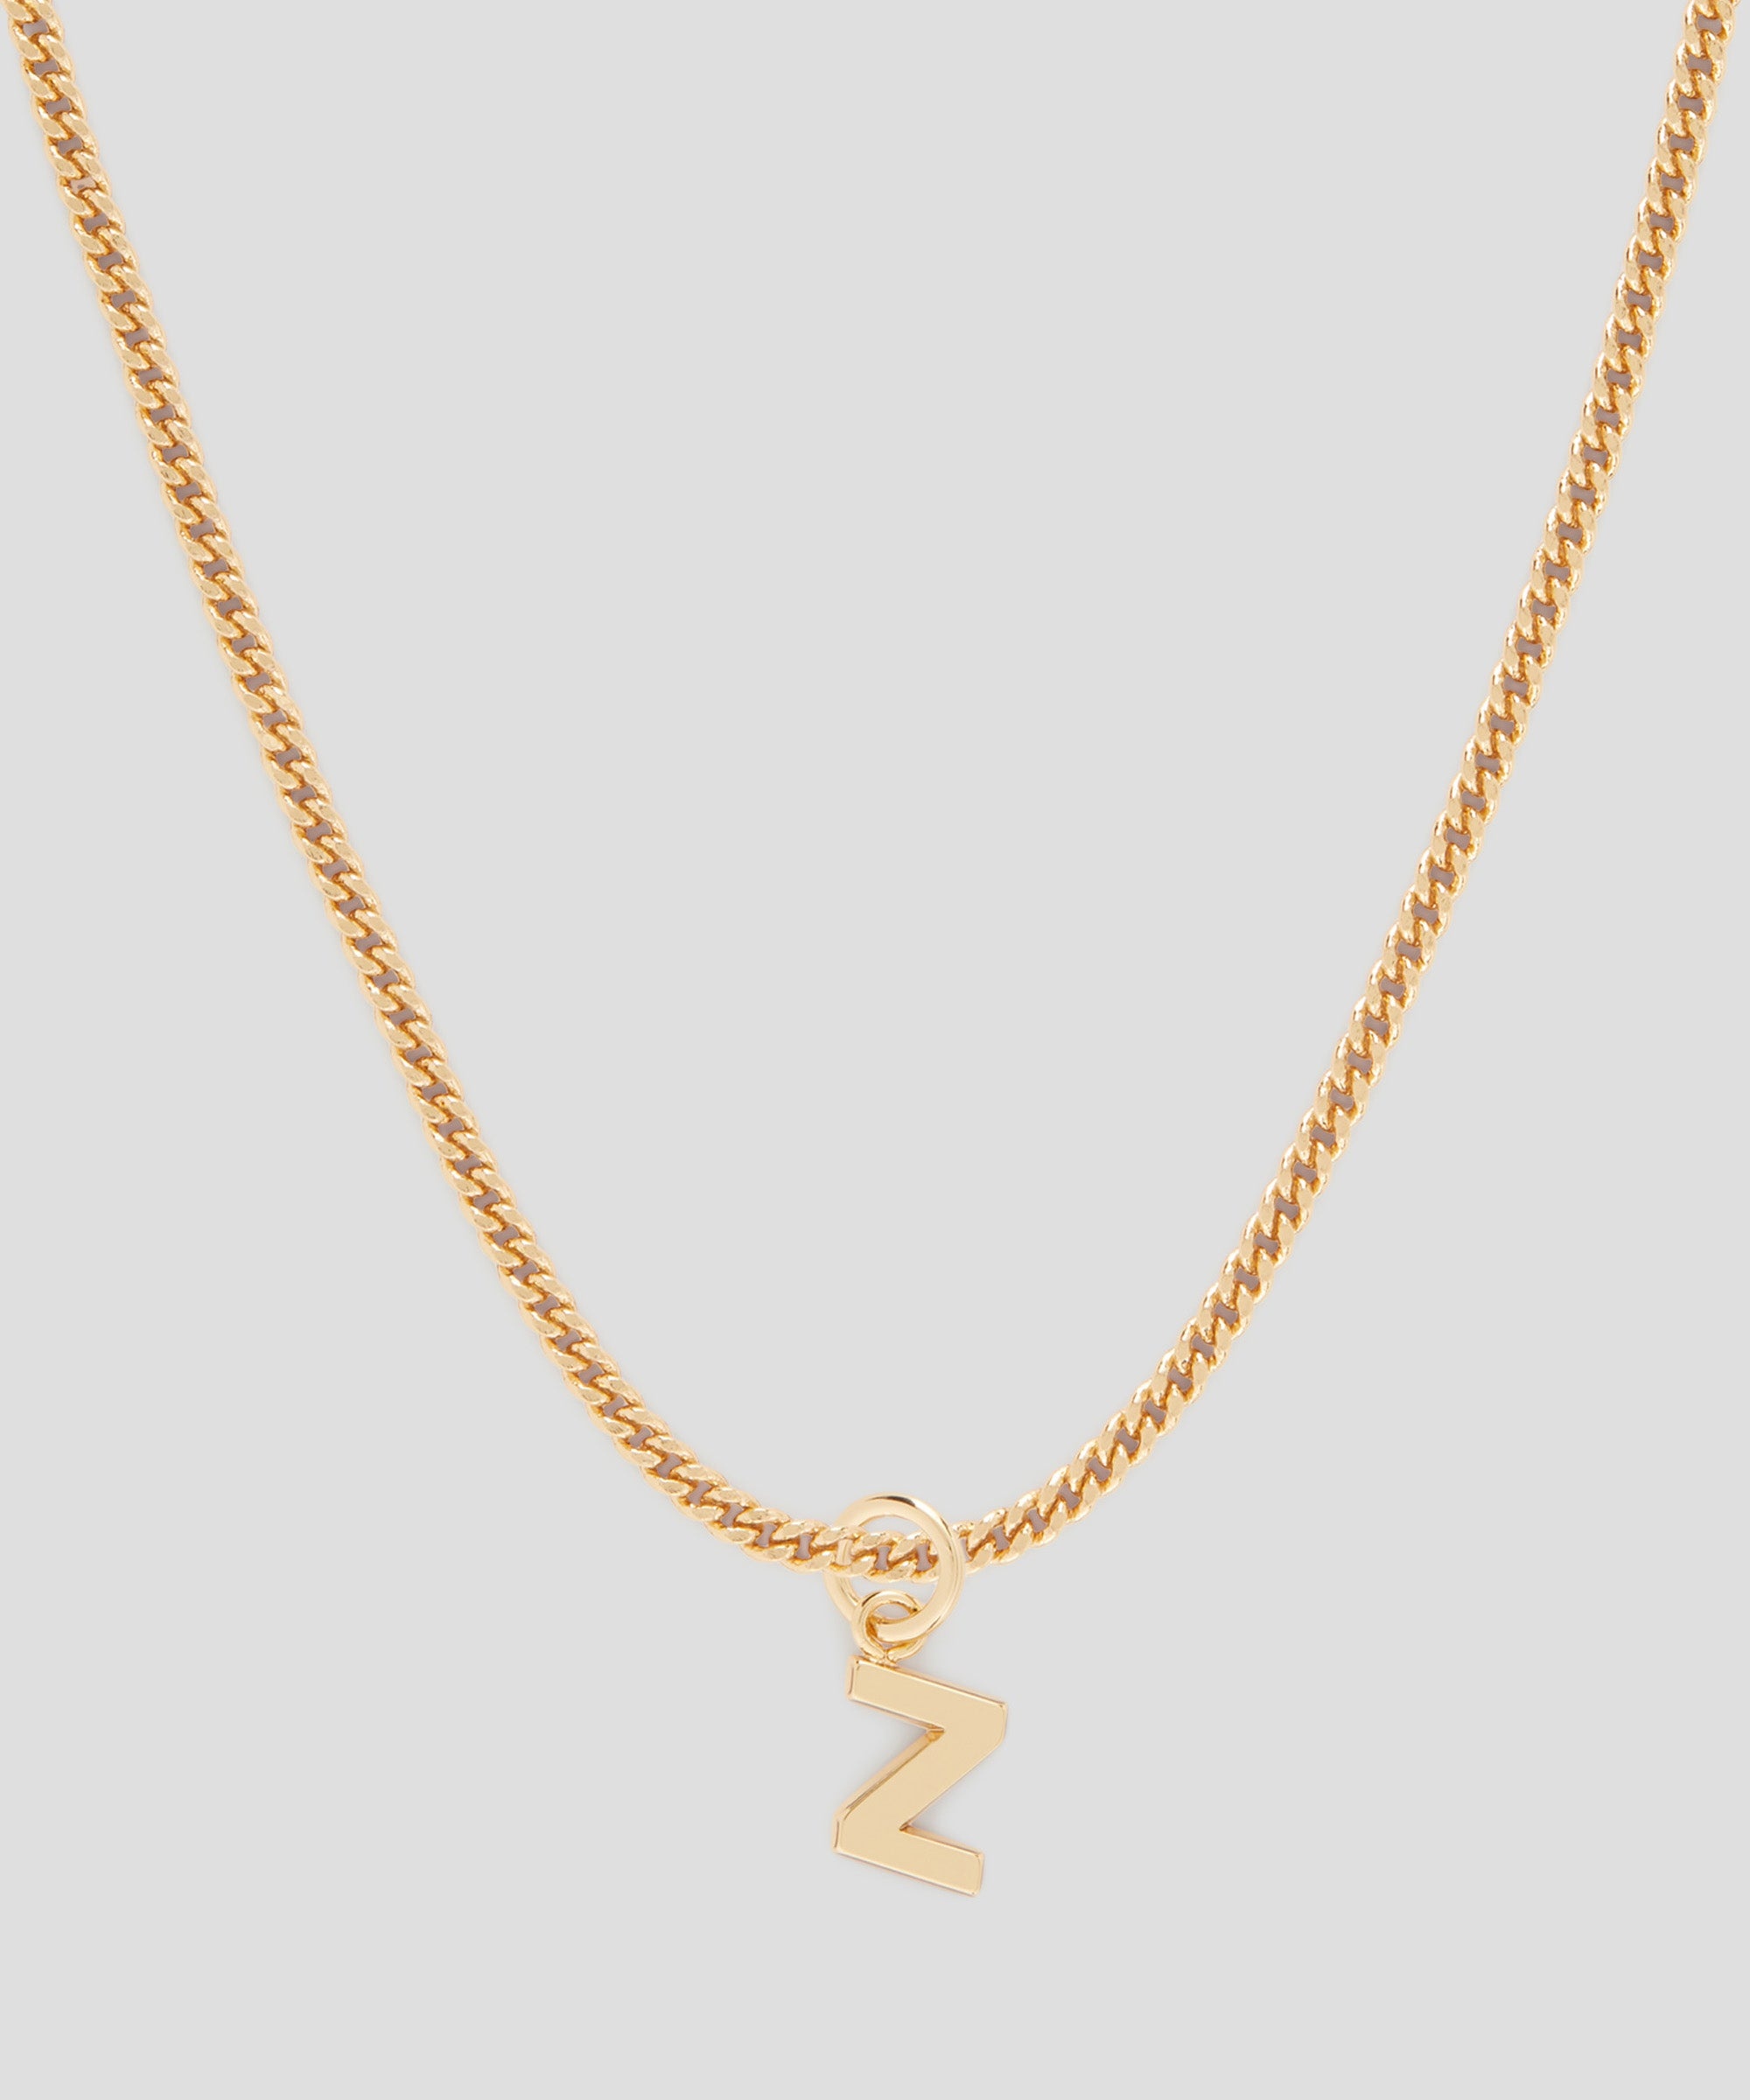 Brass letter Z charm - 2